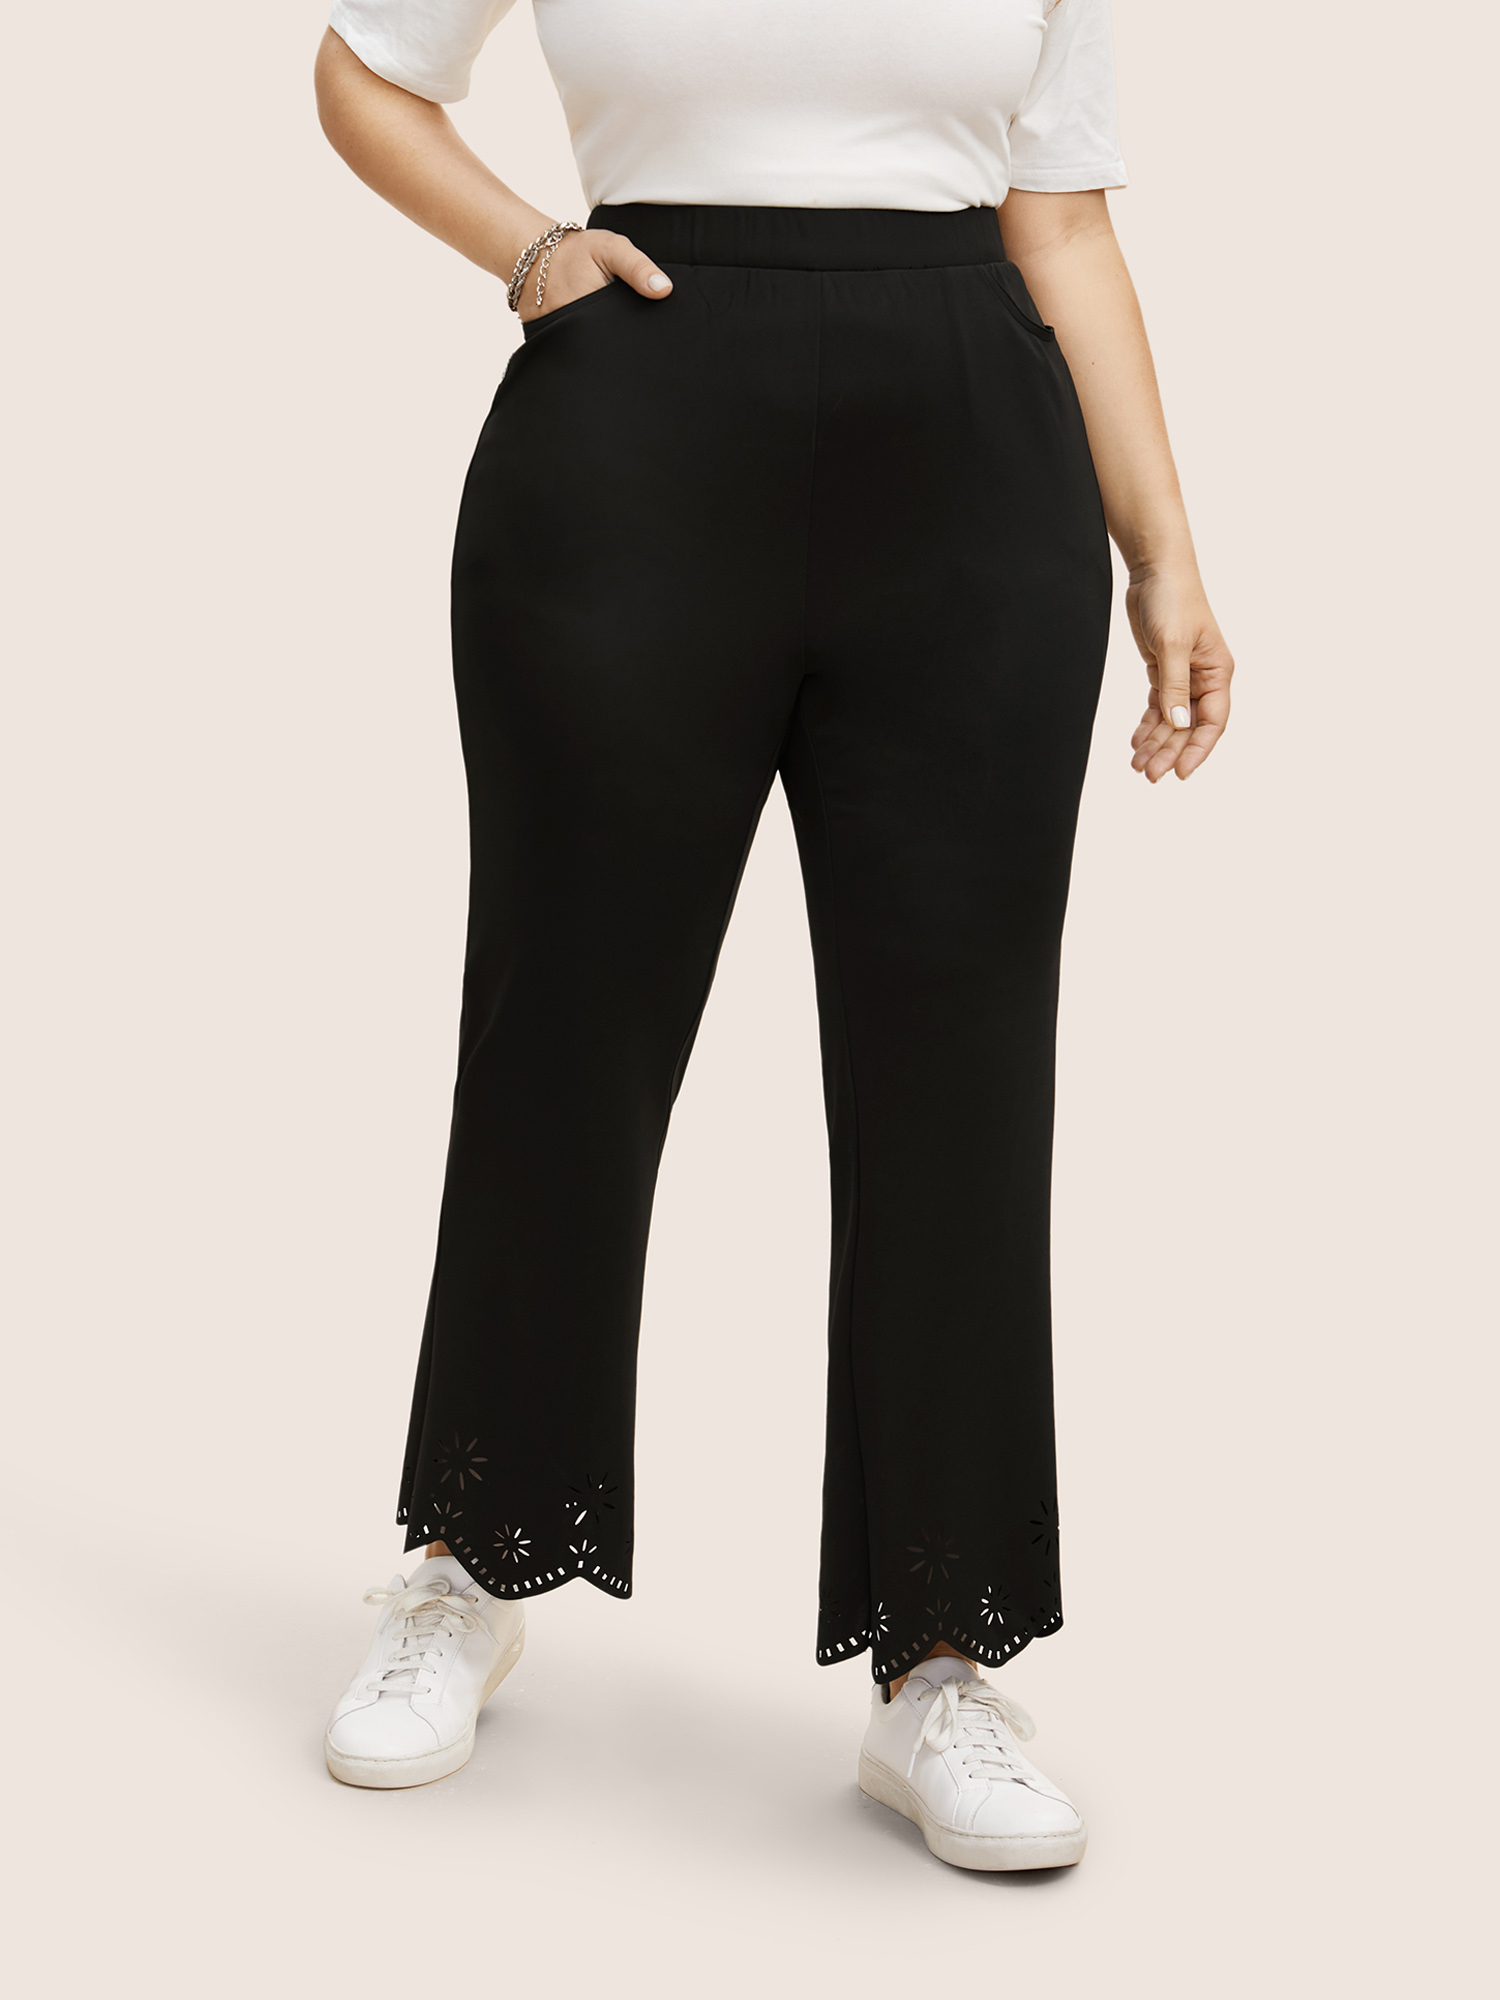 

Plus Size Medium Stretch Laser Cut Elastic Waist Bootcut Pants Women Black Elegant Bootcut Mid Rise Everyday Pants BloomChic